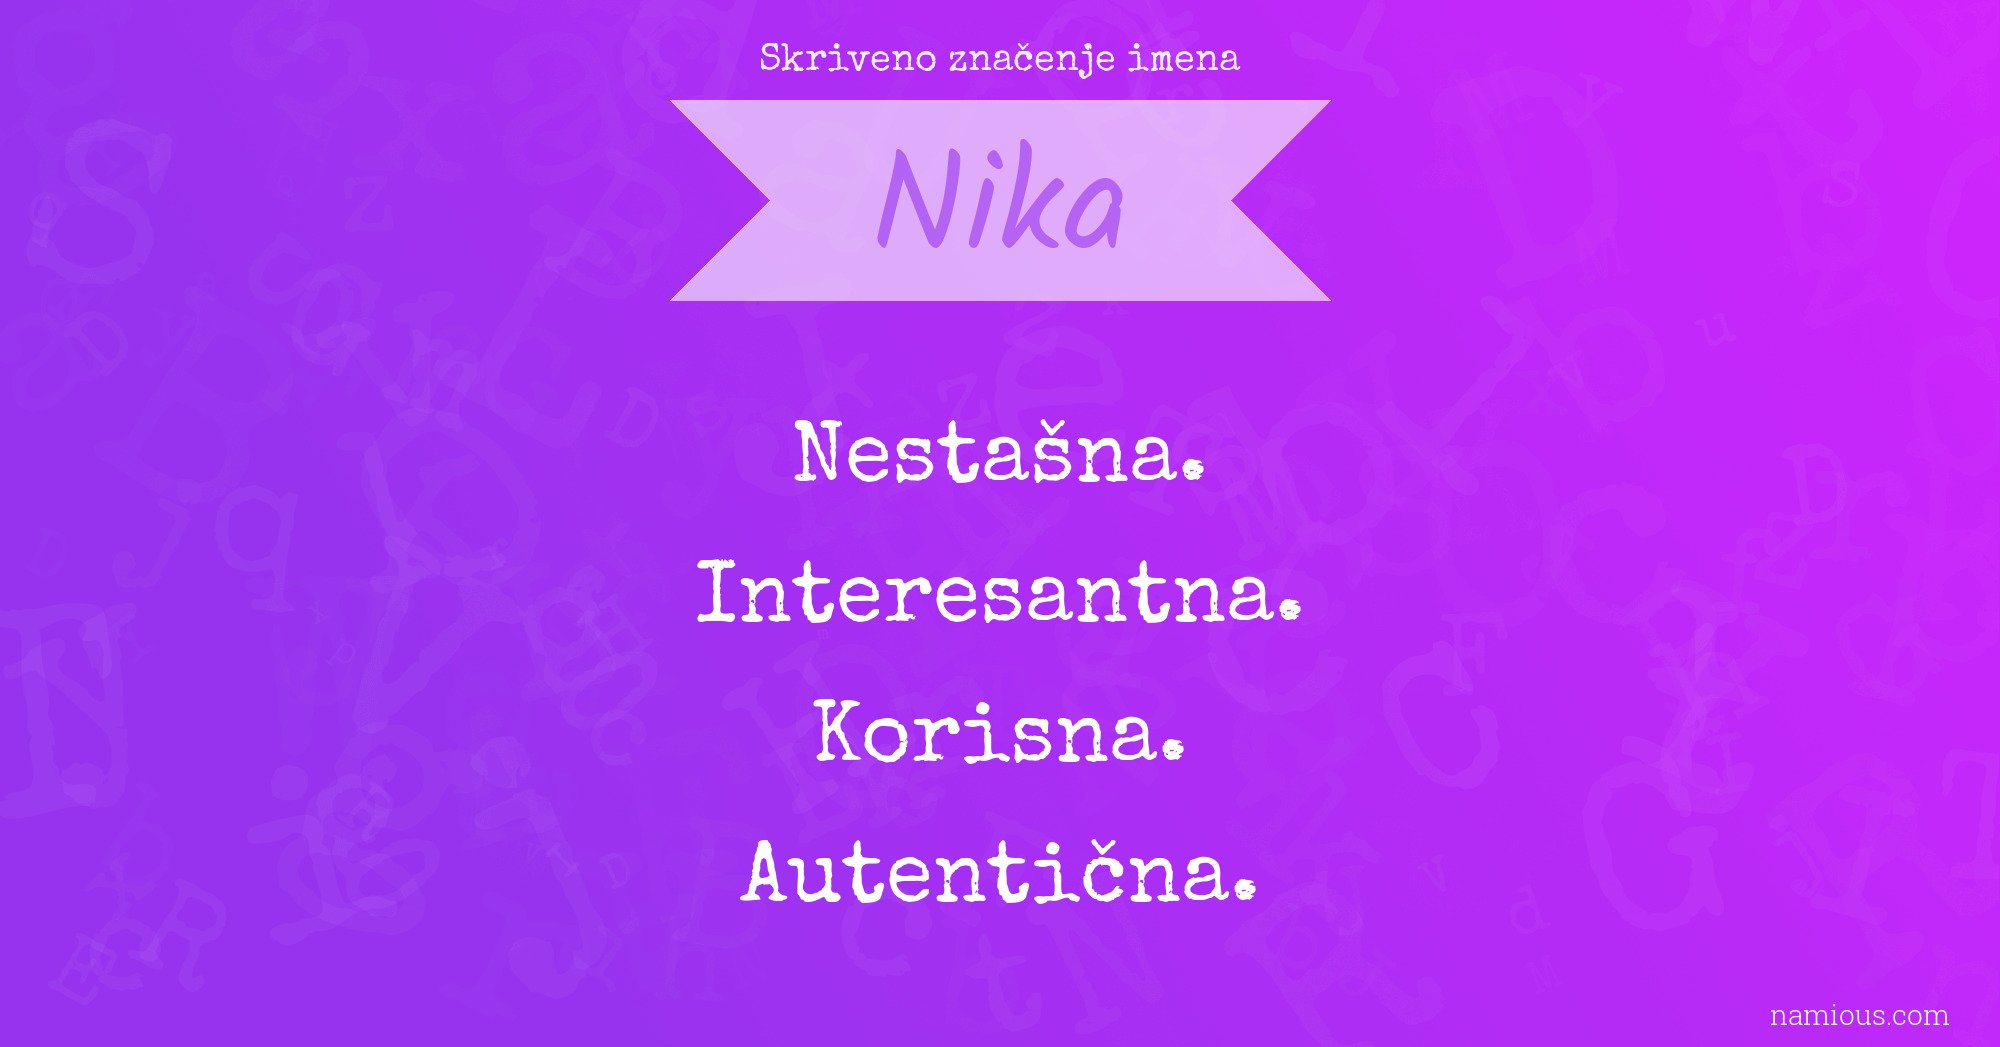 Skriveno značenje imena Nika